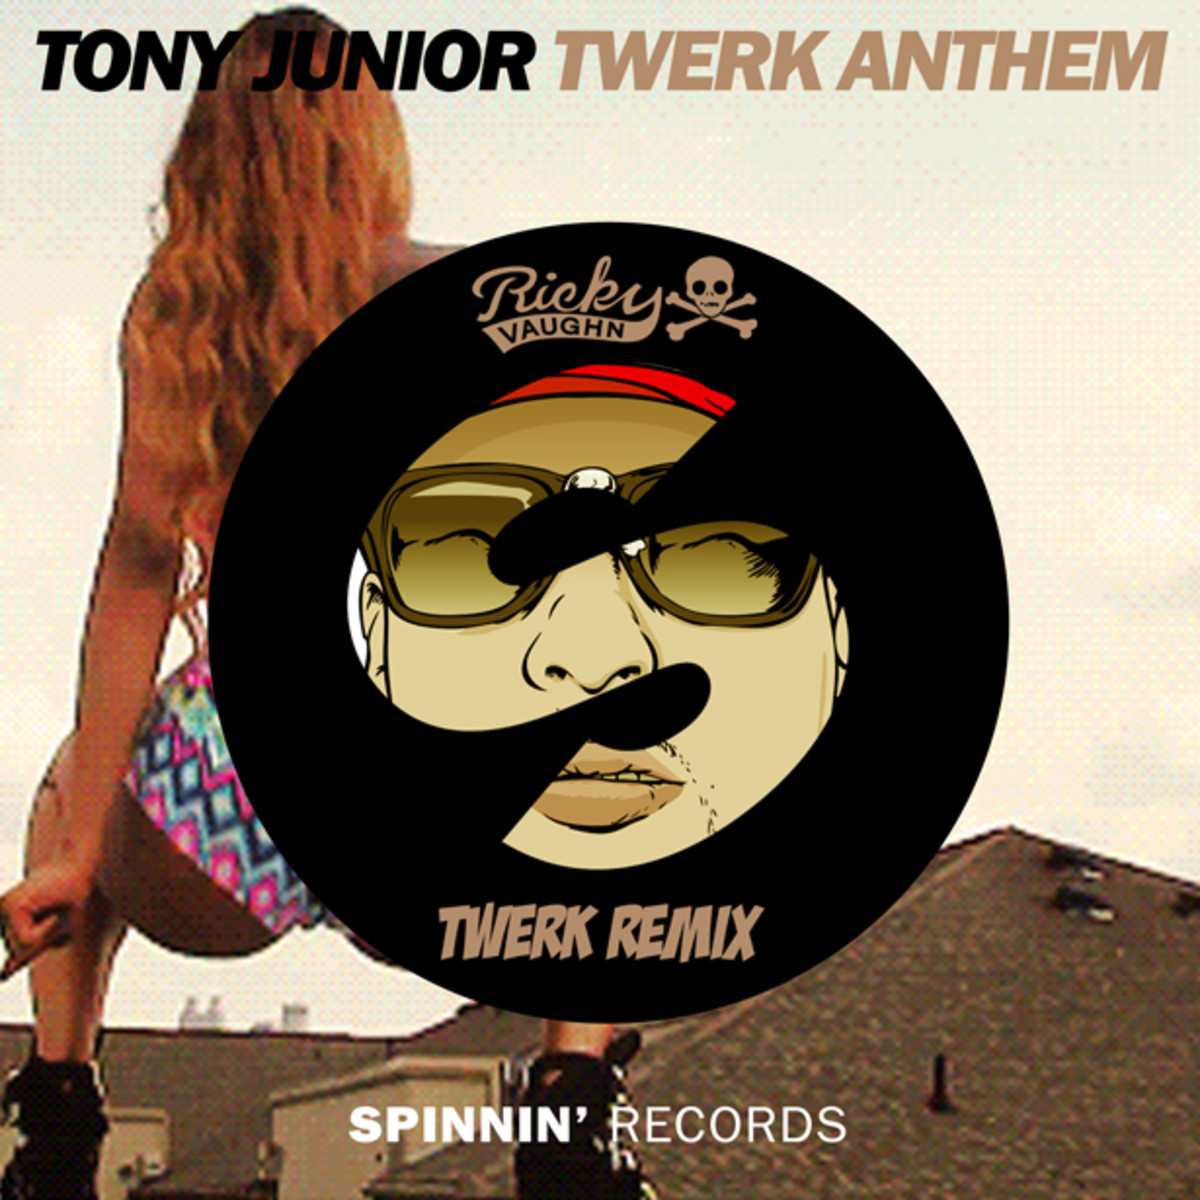 Tony Junior "Twerk Anthem" (Ricky Vaughn Twerk Remix) - EDM Download